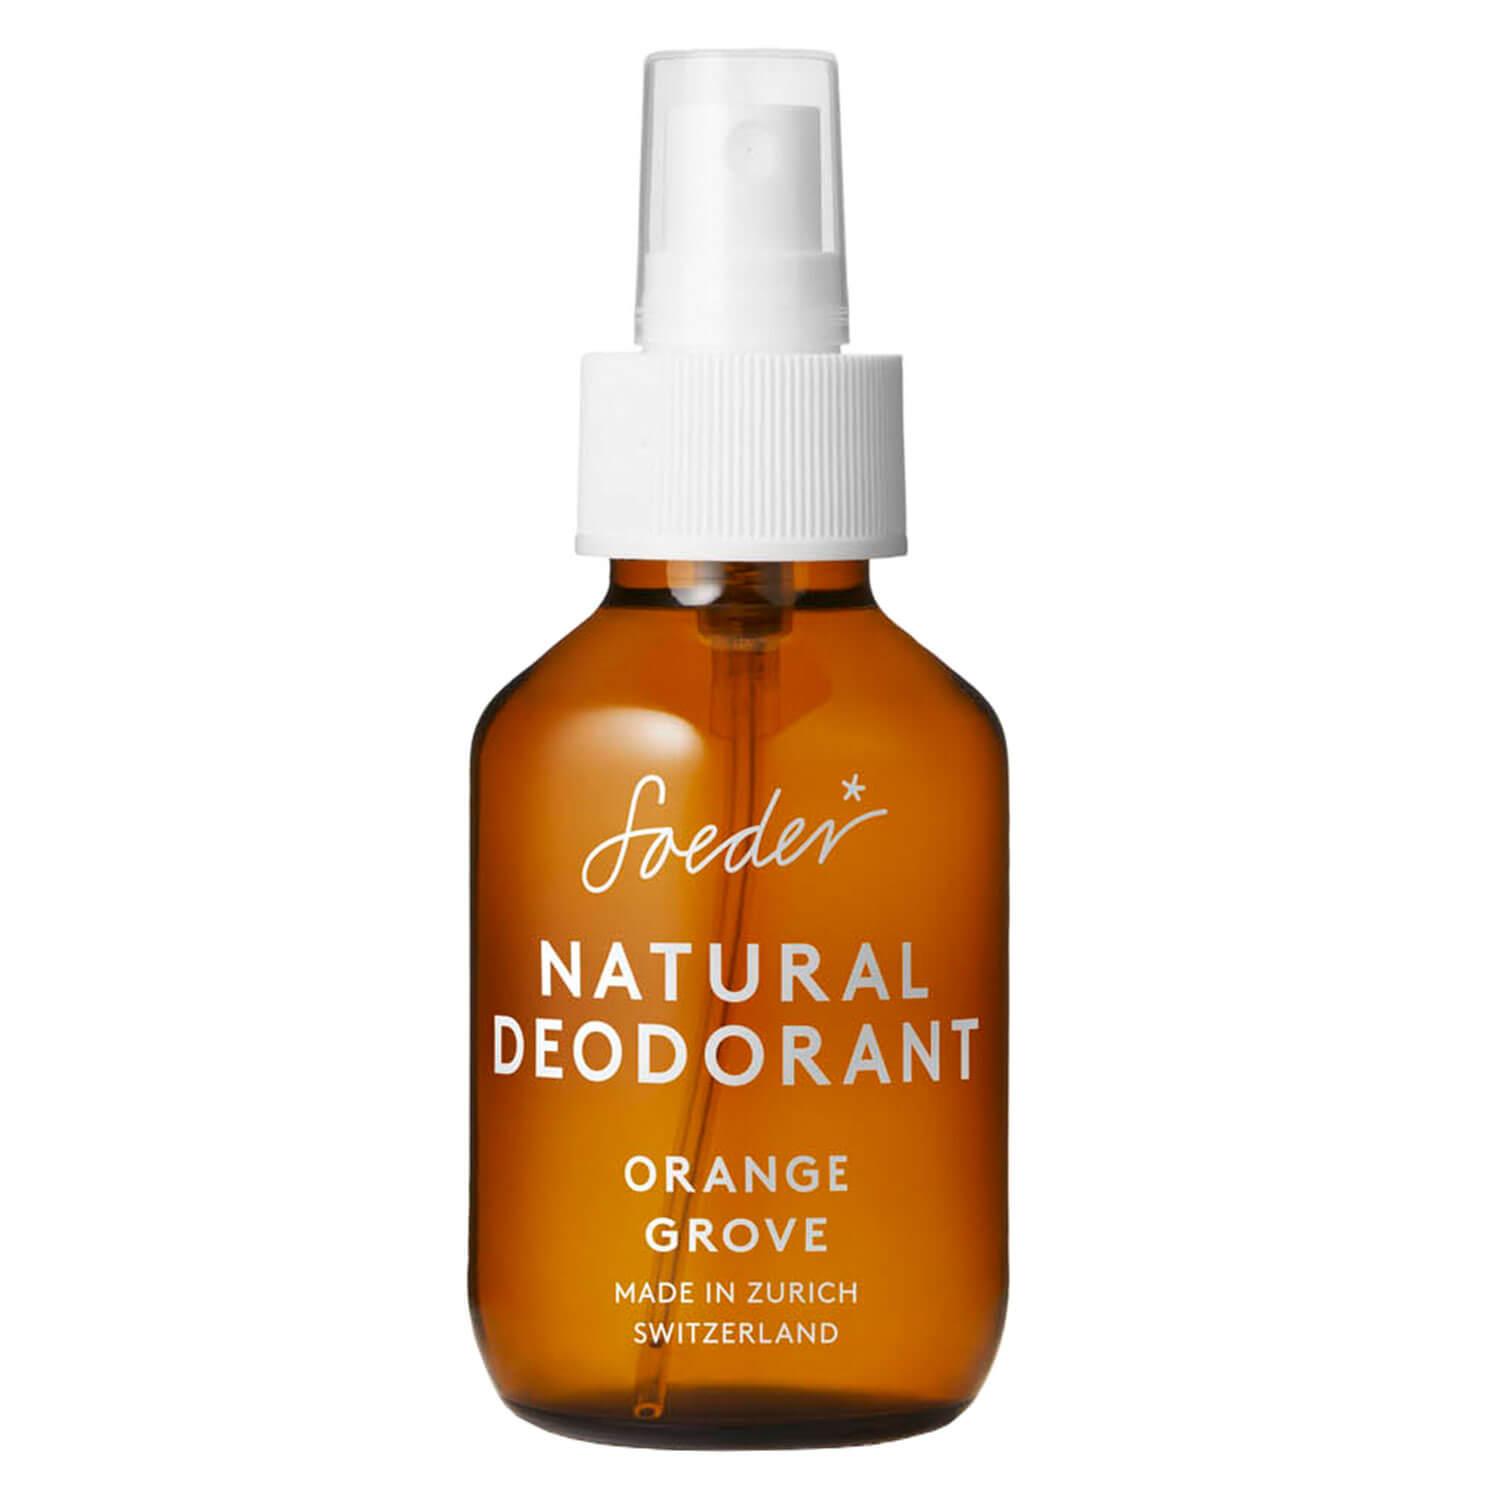 Soeder - Natural Deodorant Orange Grove